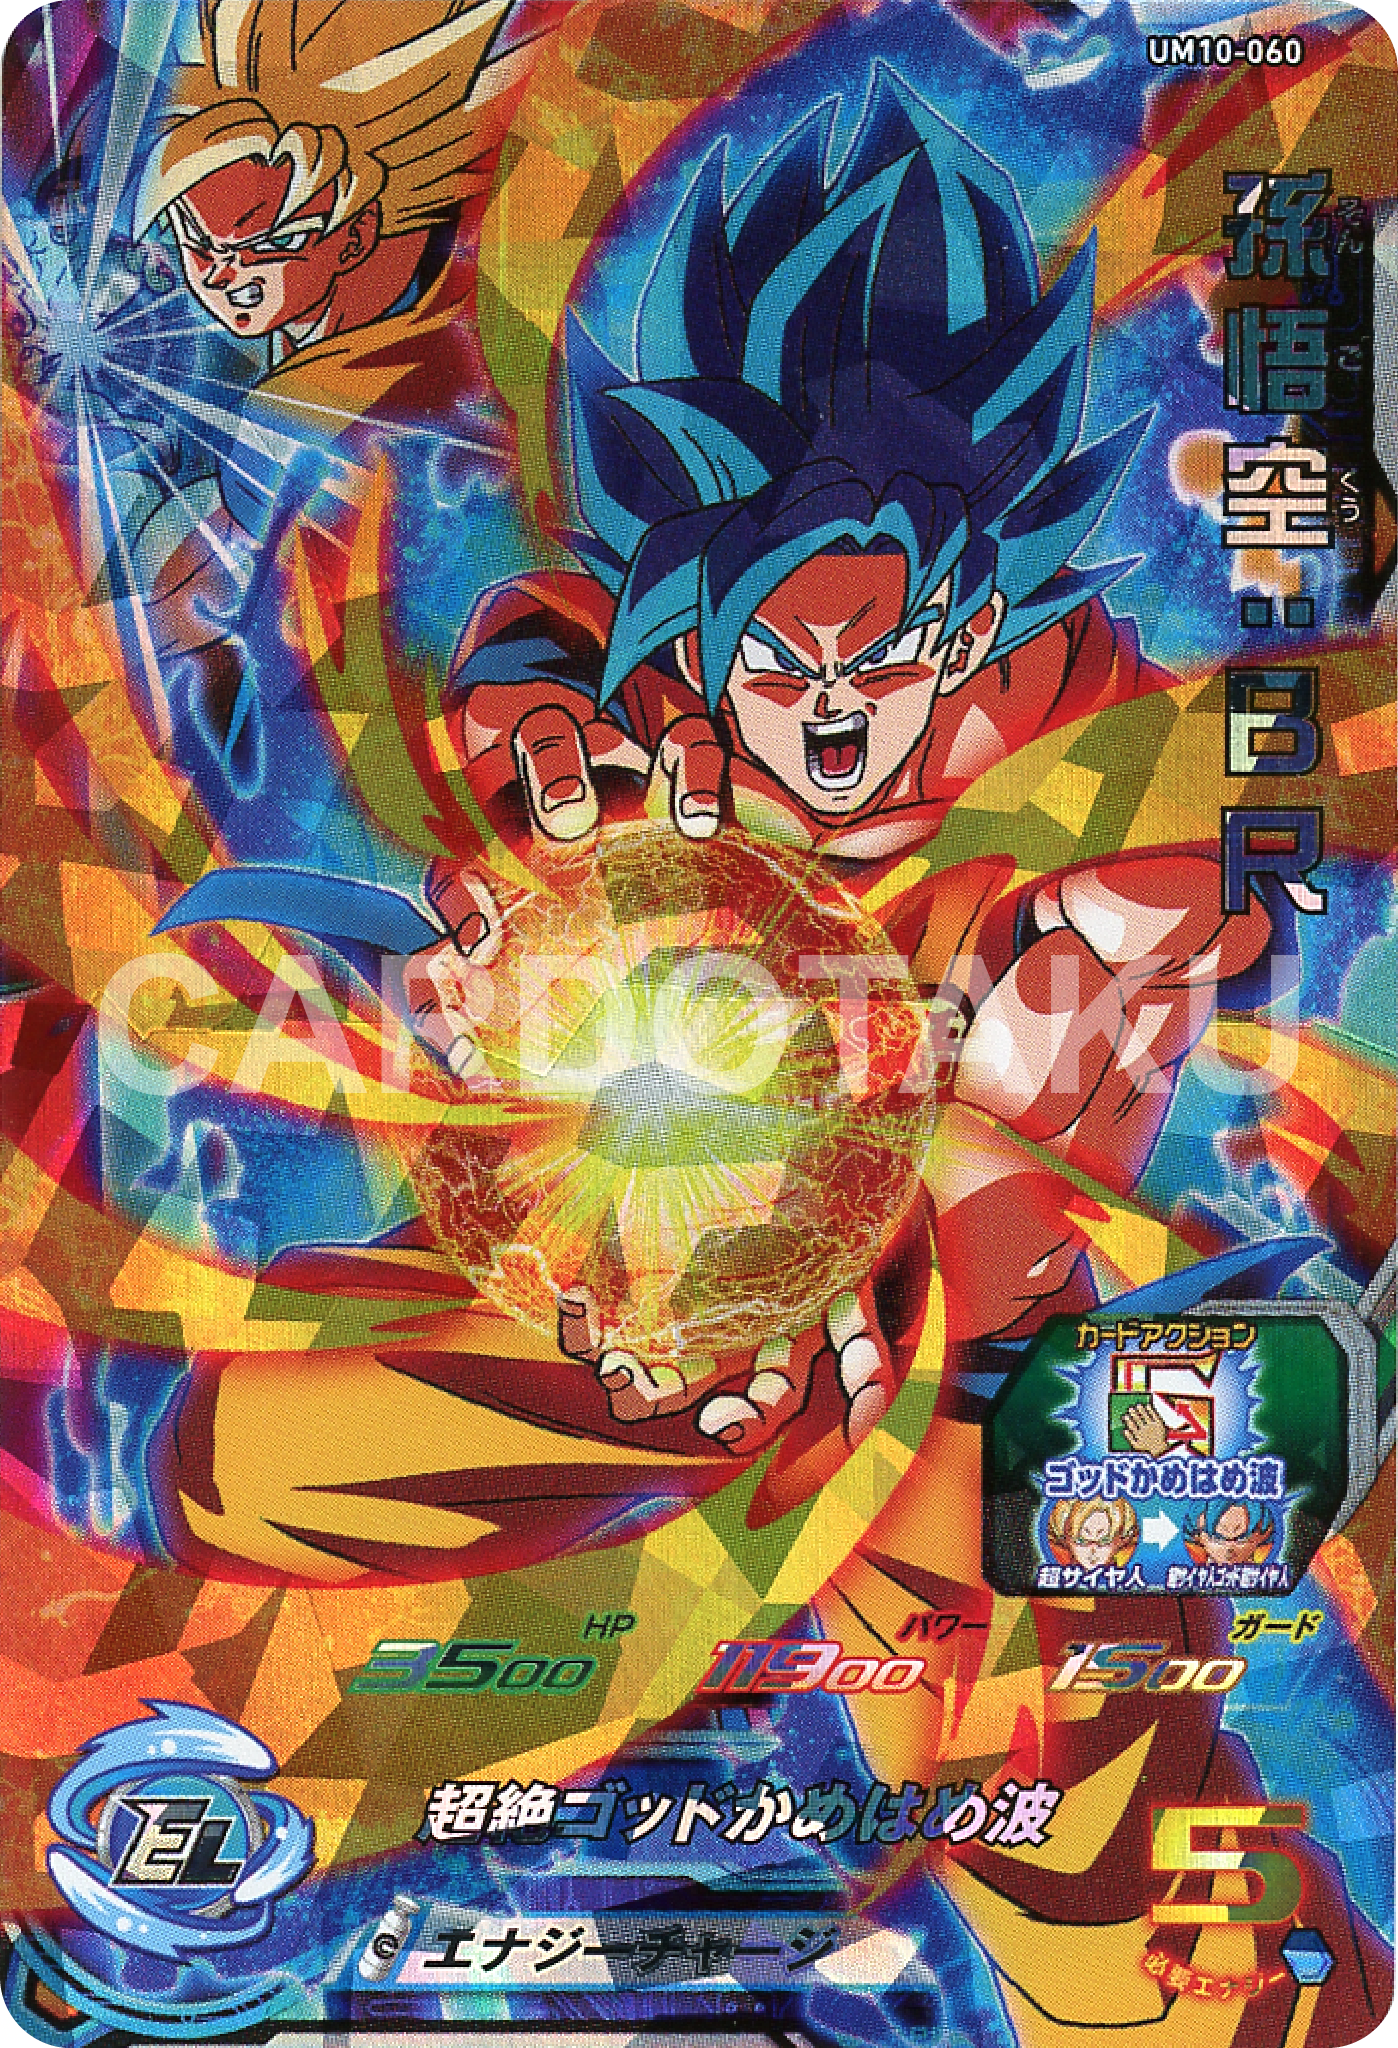 SUPER DRAGON BALL HEROES UM10-060 Son Goku : BR